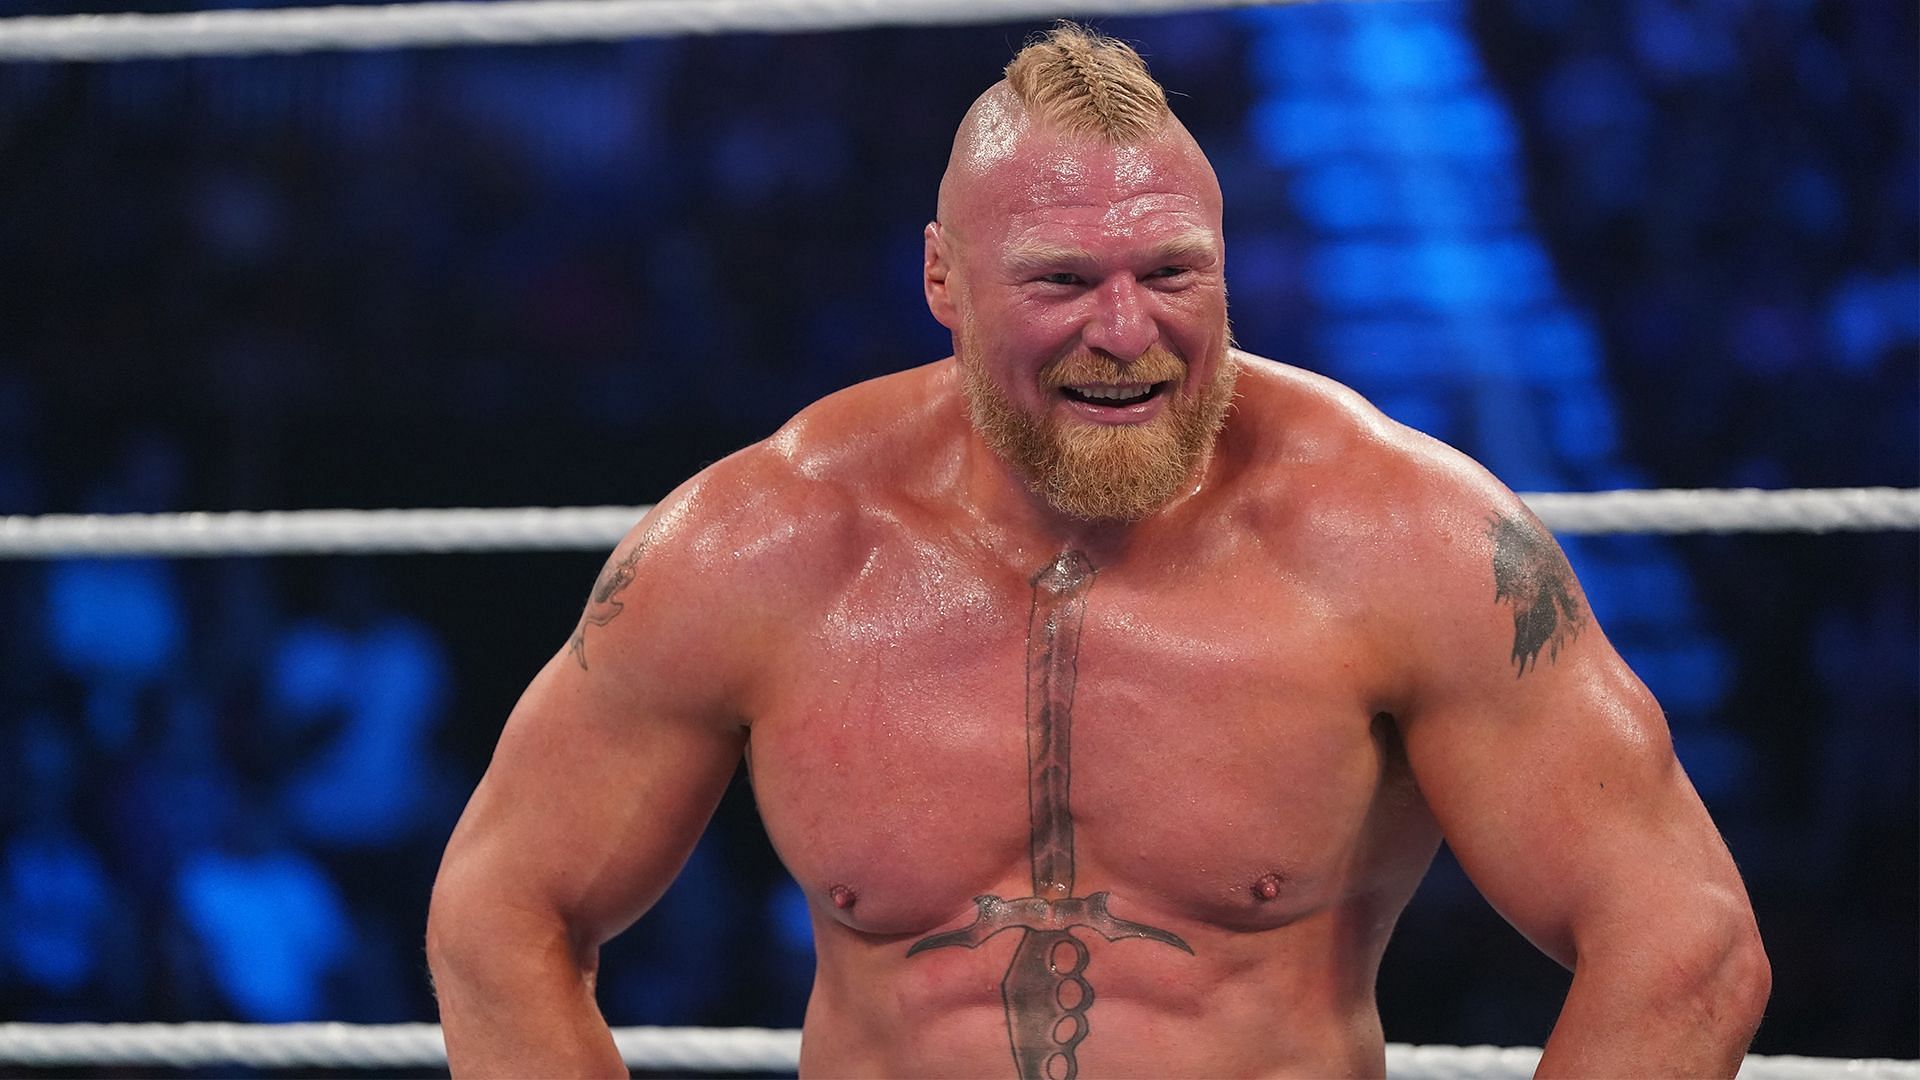 Brock Lesnar at Backlash